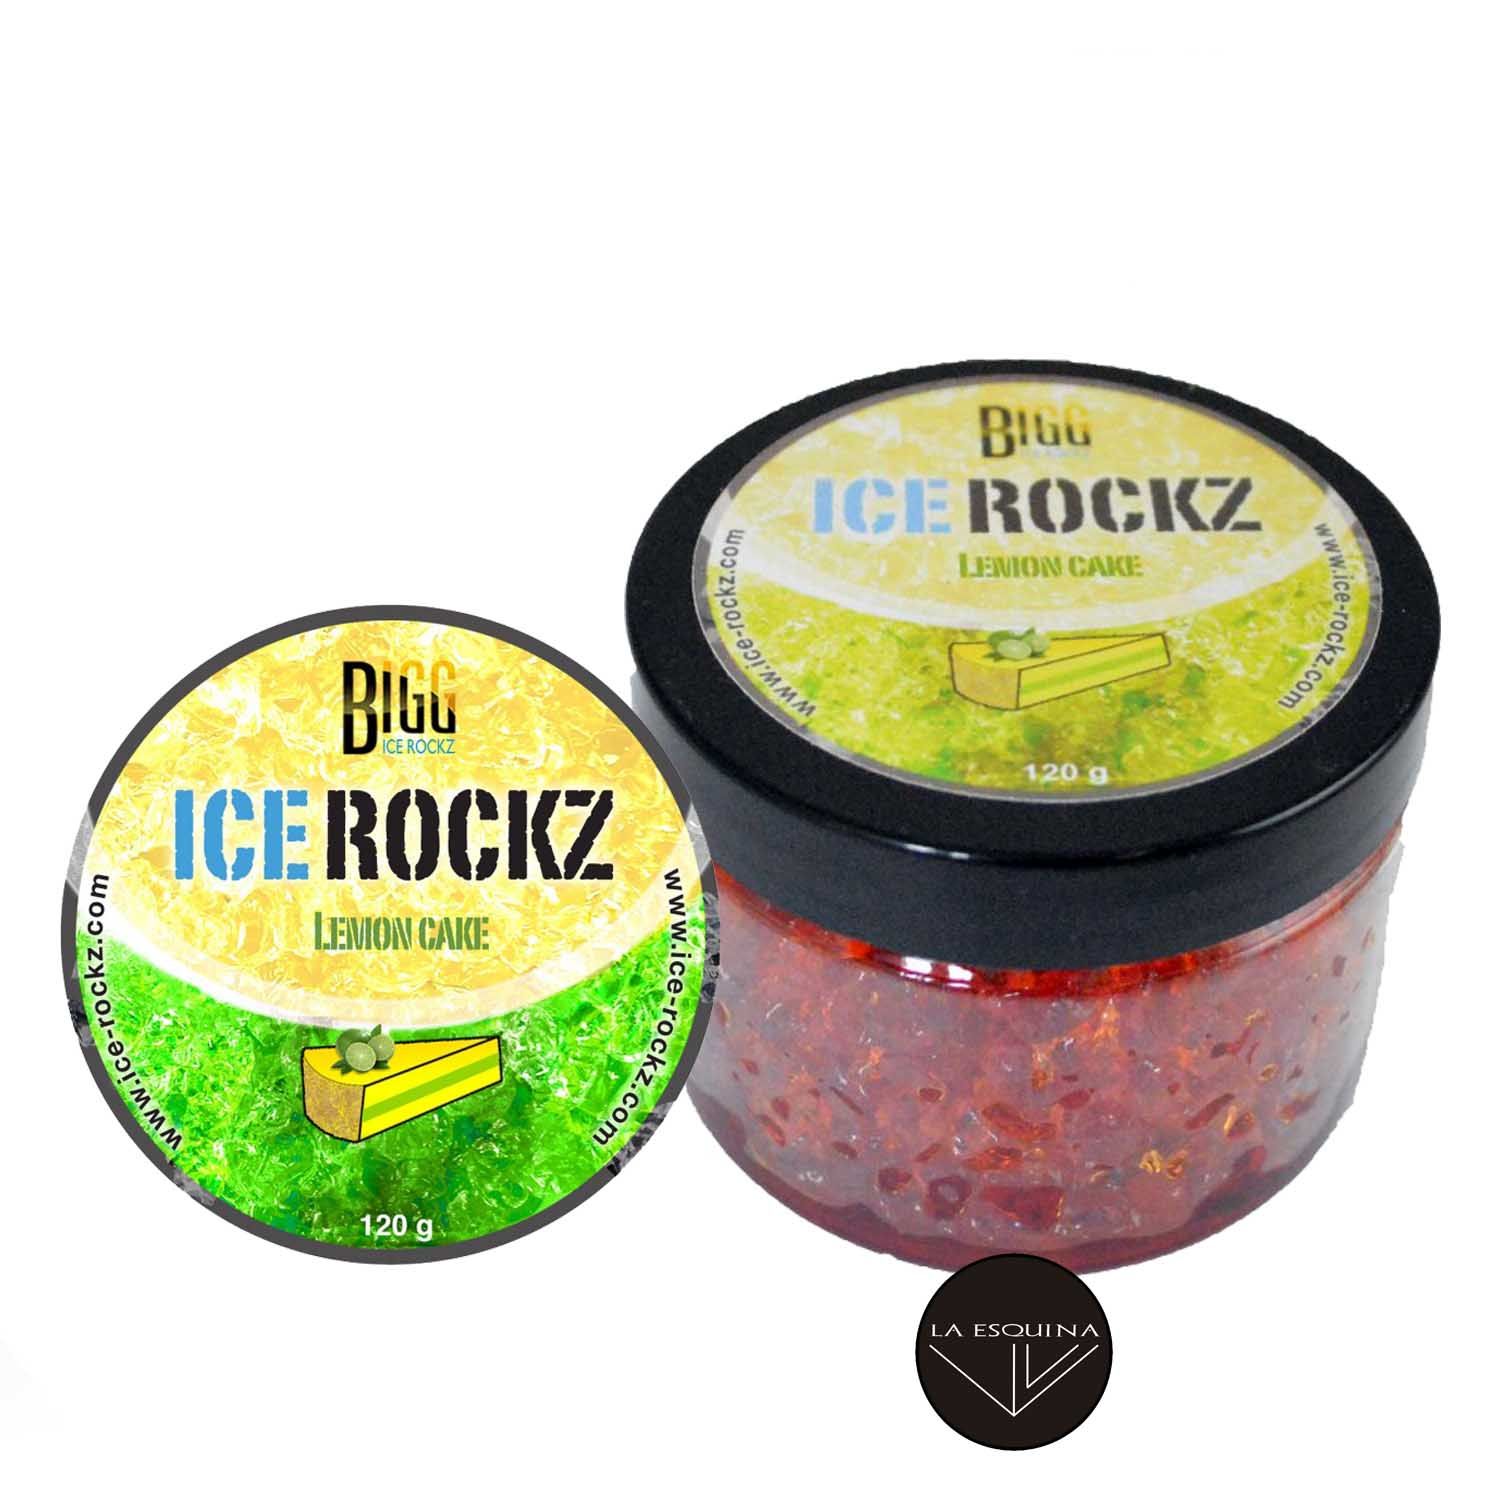 Gel Rock de Cachimba BIGG ICE ROCKZ – 120 g. – Lemon Cake